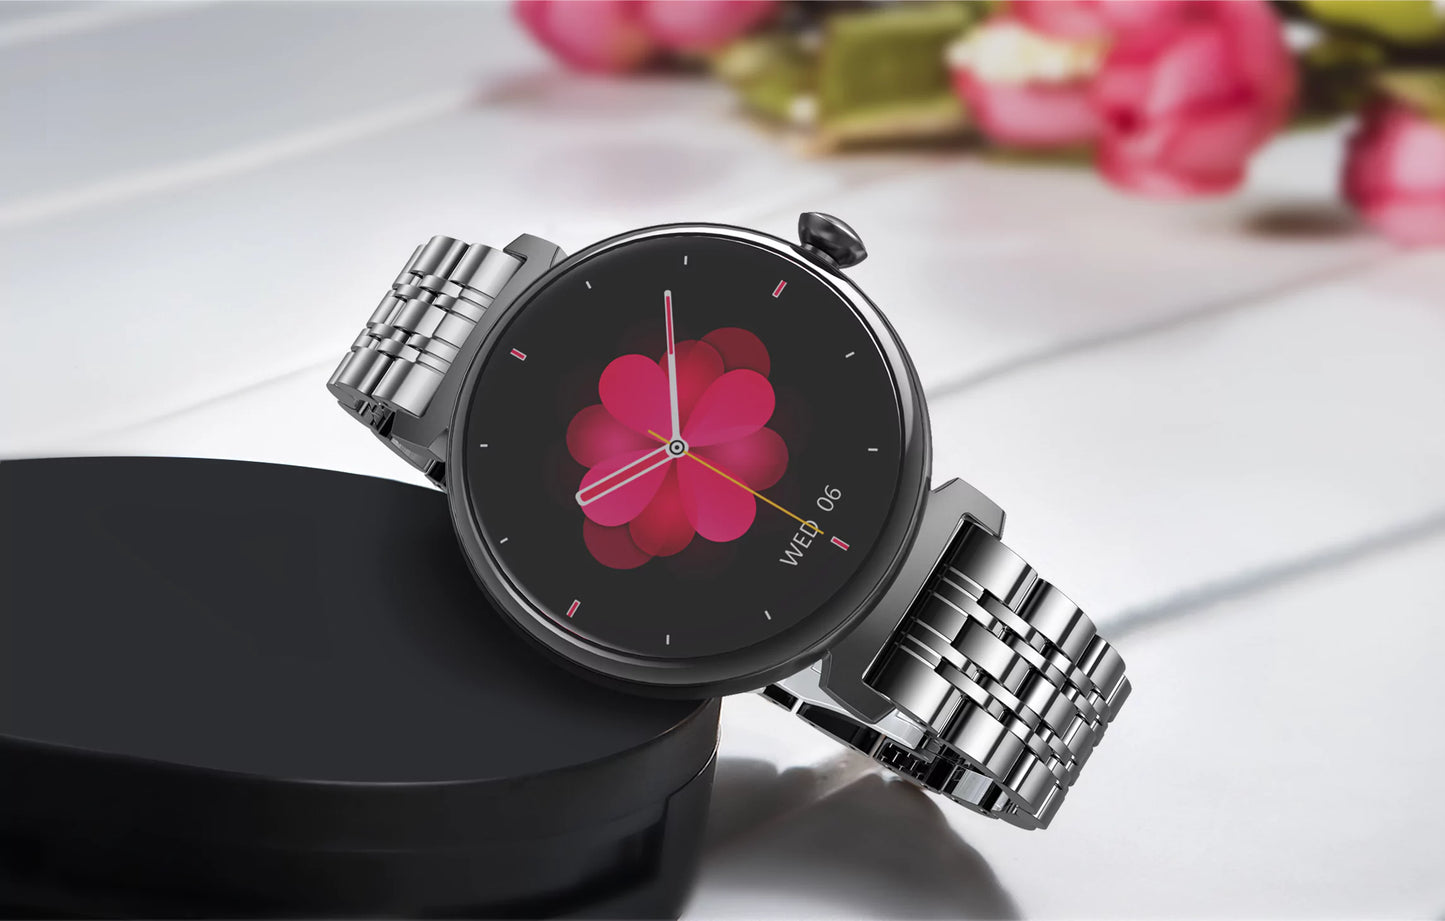 Smartini Mini Smart Watch - ISPEKTRUM Smart Watch